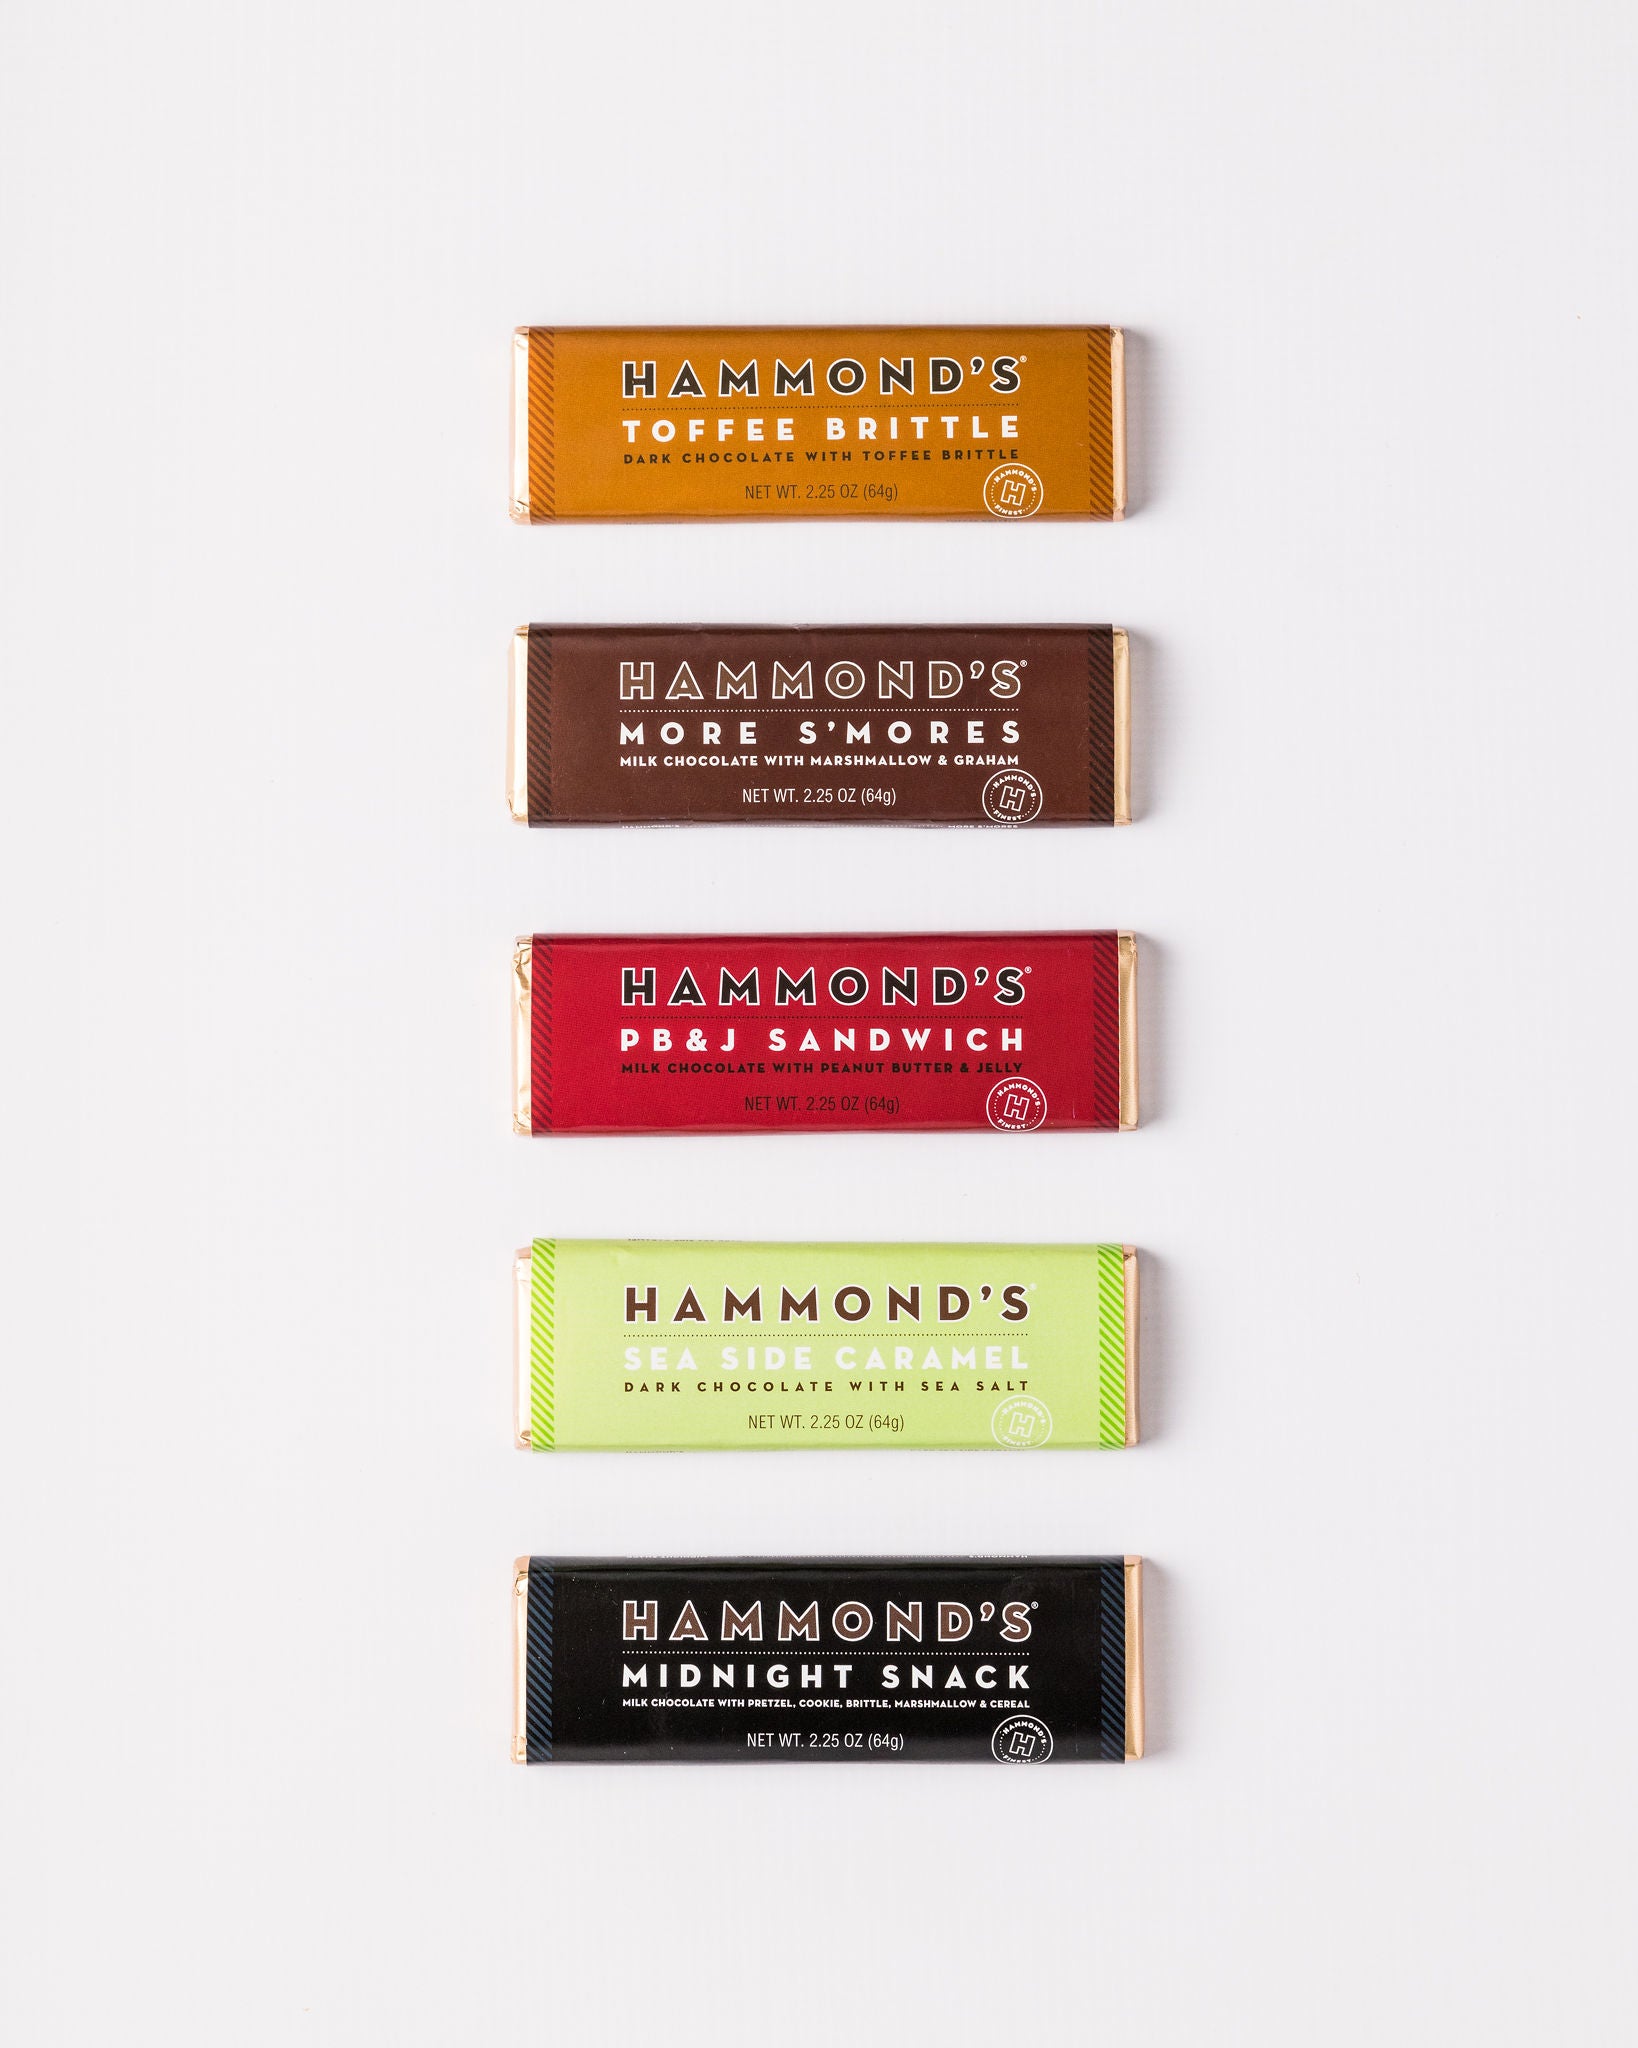 Hammond's Sea Side Caramel Milk Chocolate - 2.25 oz bar